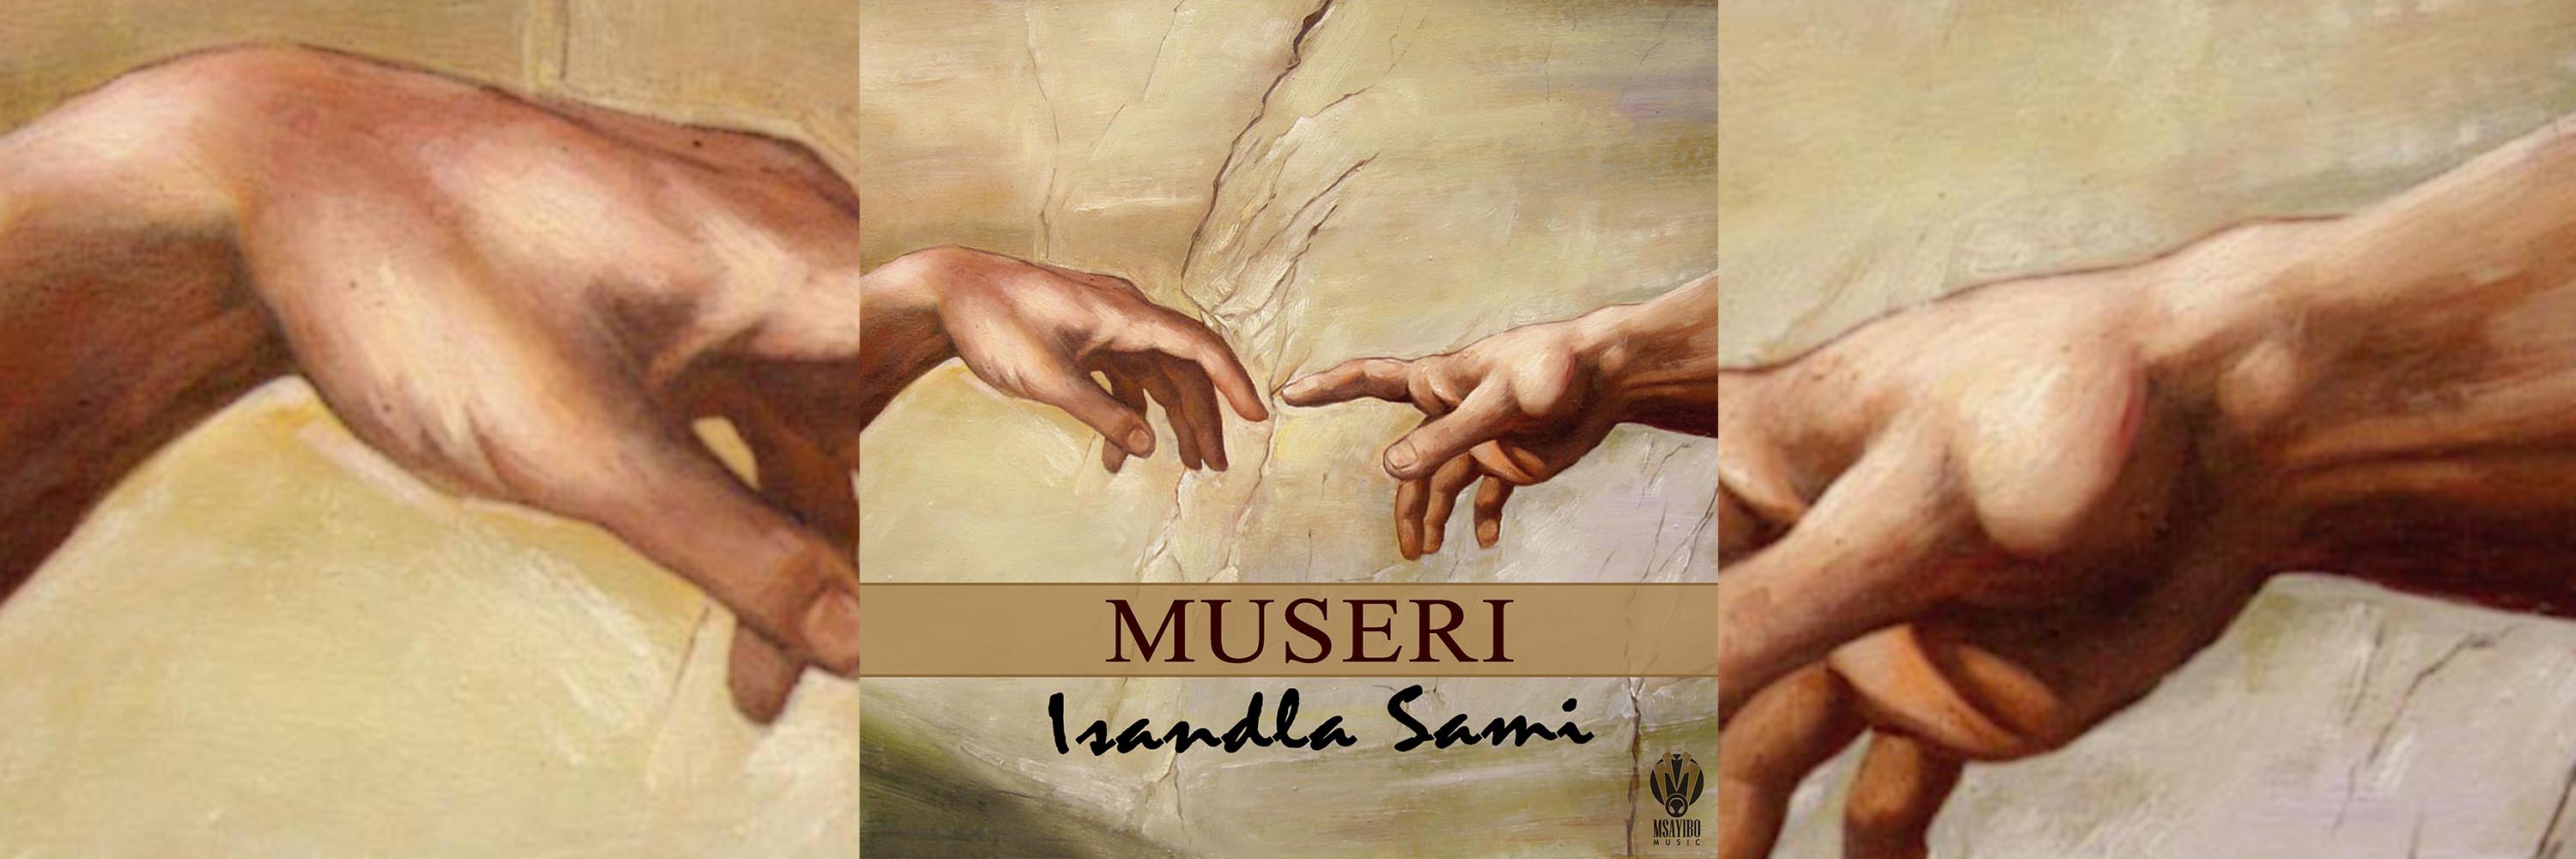 Museri - Isandla Sami [Slider]